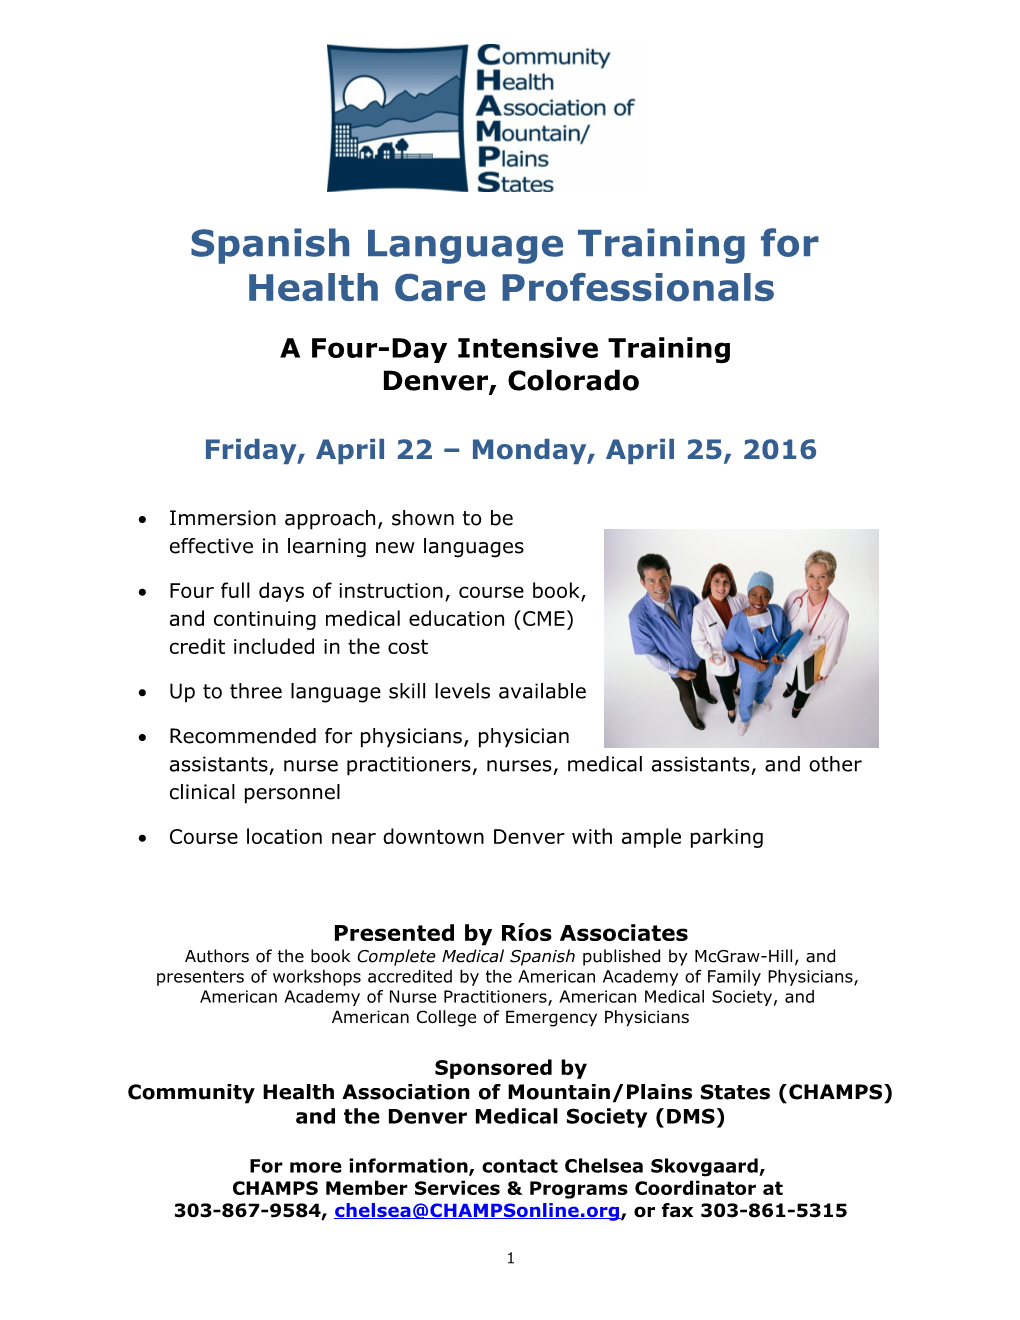 Spanish Language for Health Care Professionals